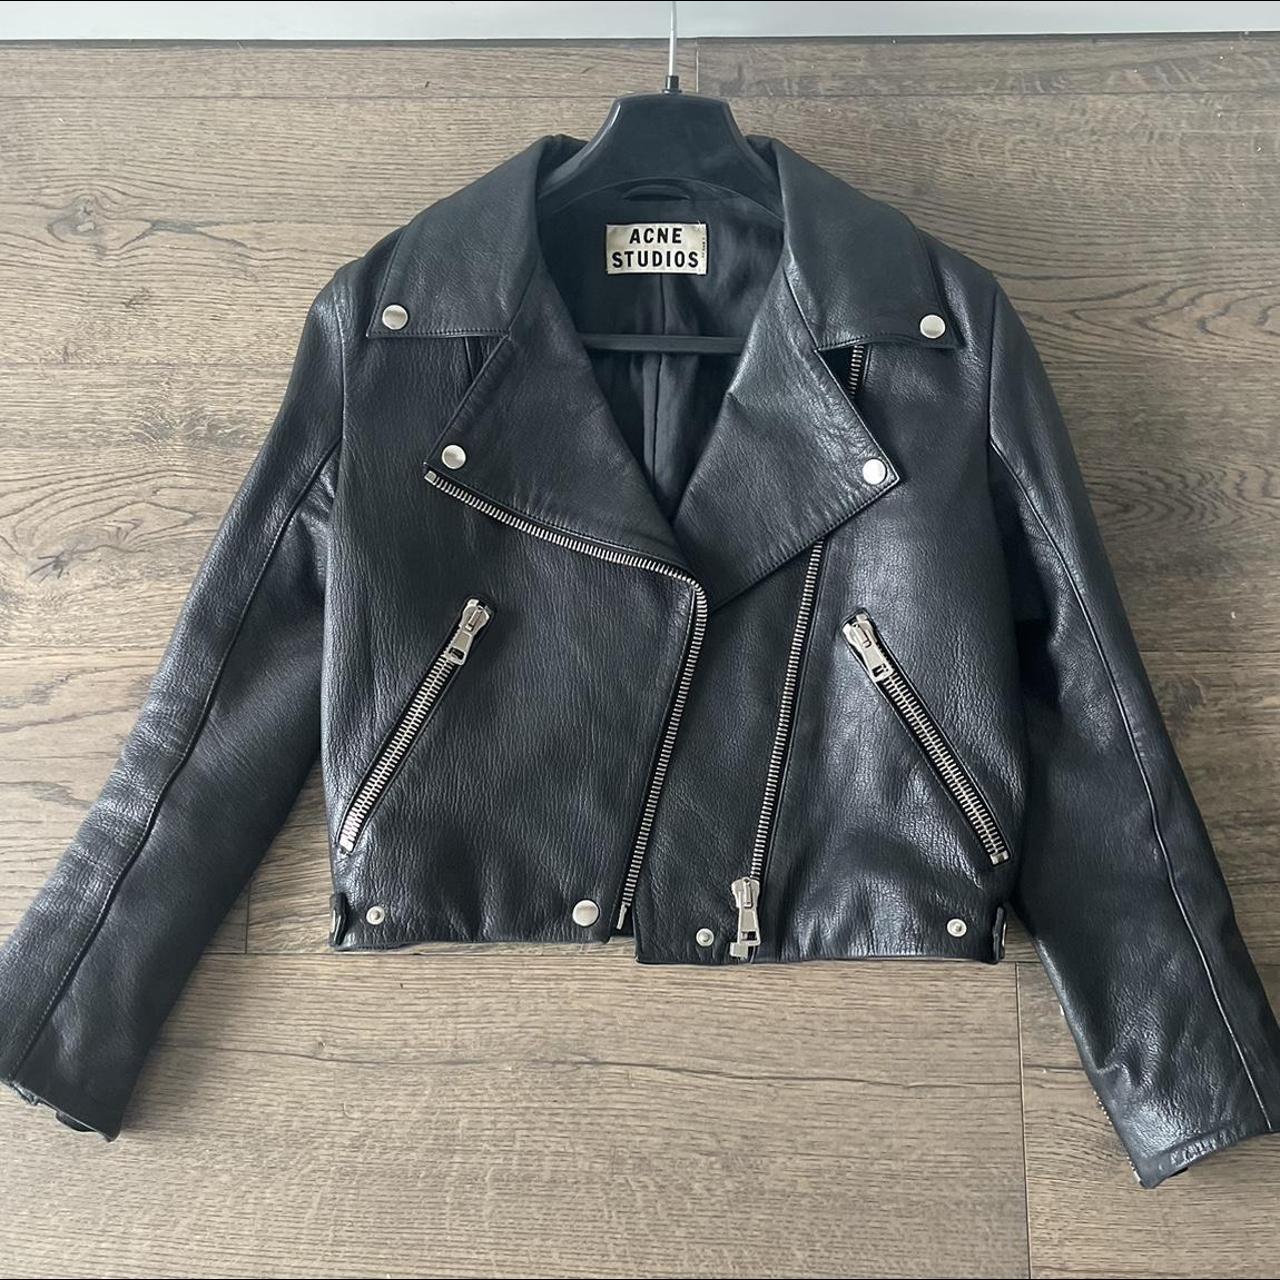 Acne studios Rita SS13 black leather biker jacket... - Depop